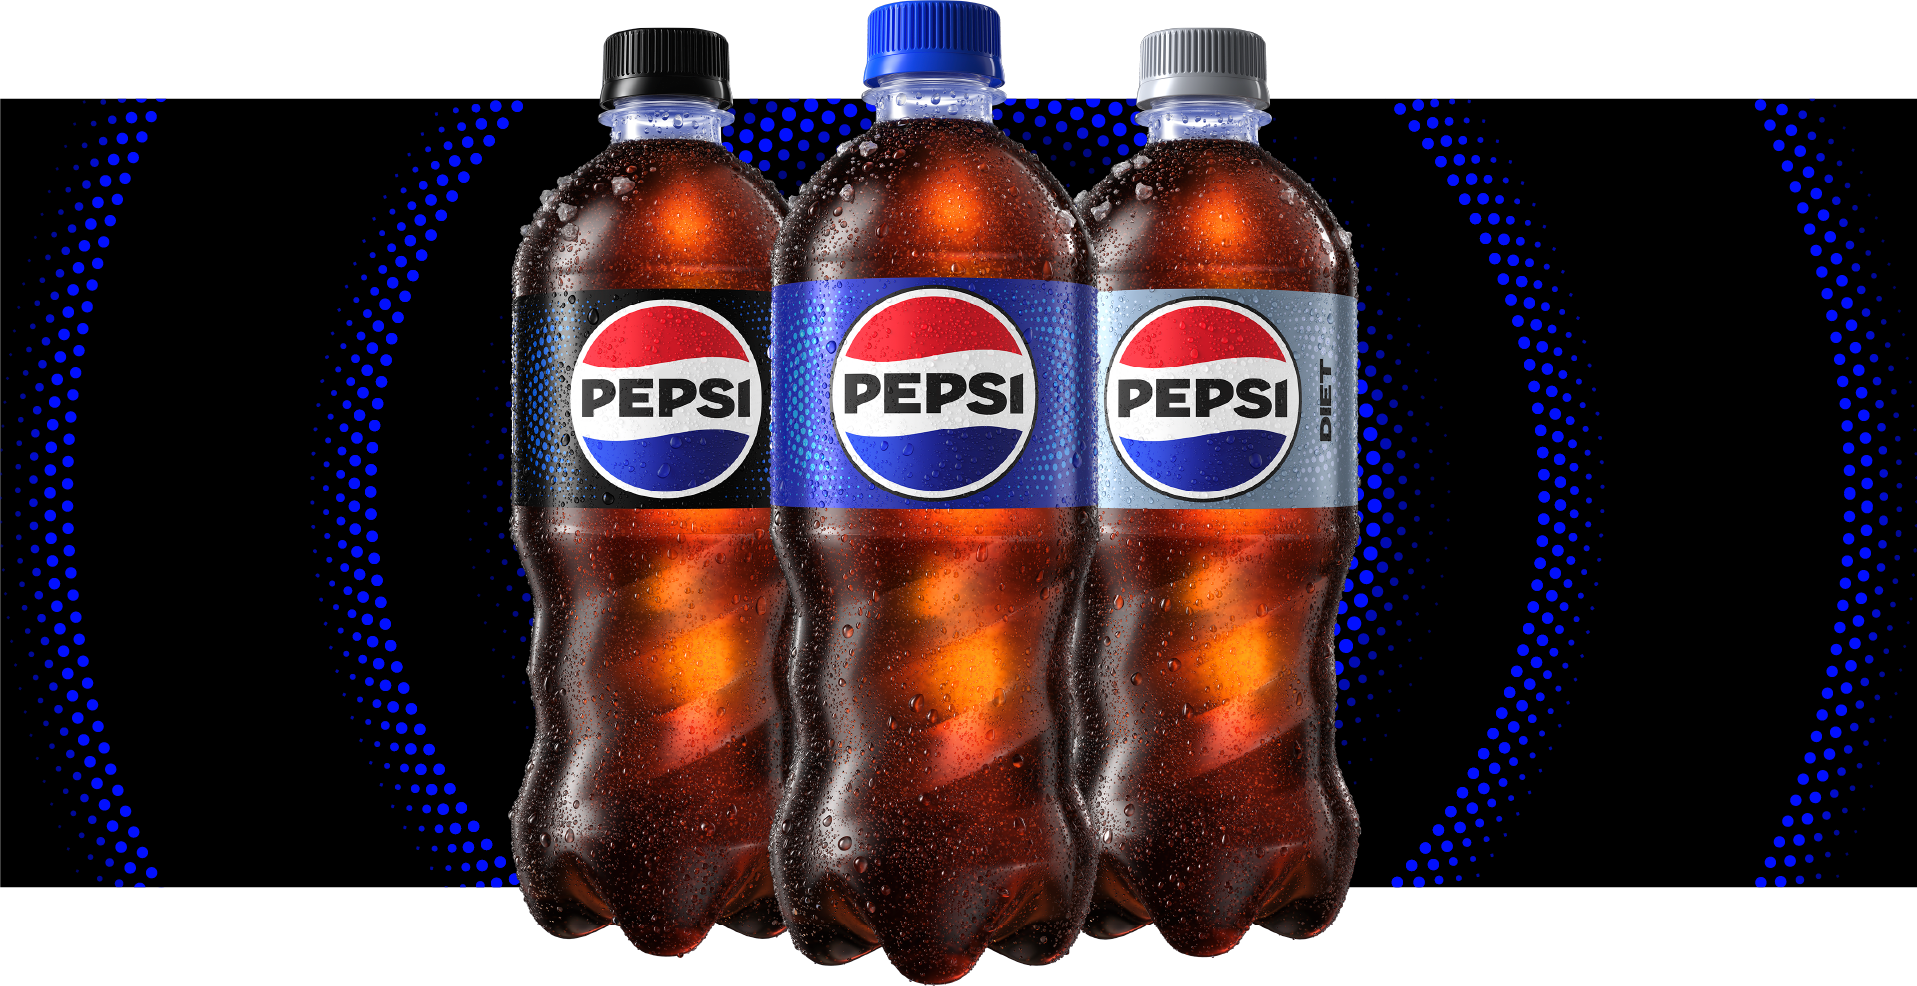 Graphic of Pepsi bottles